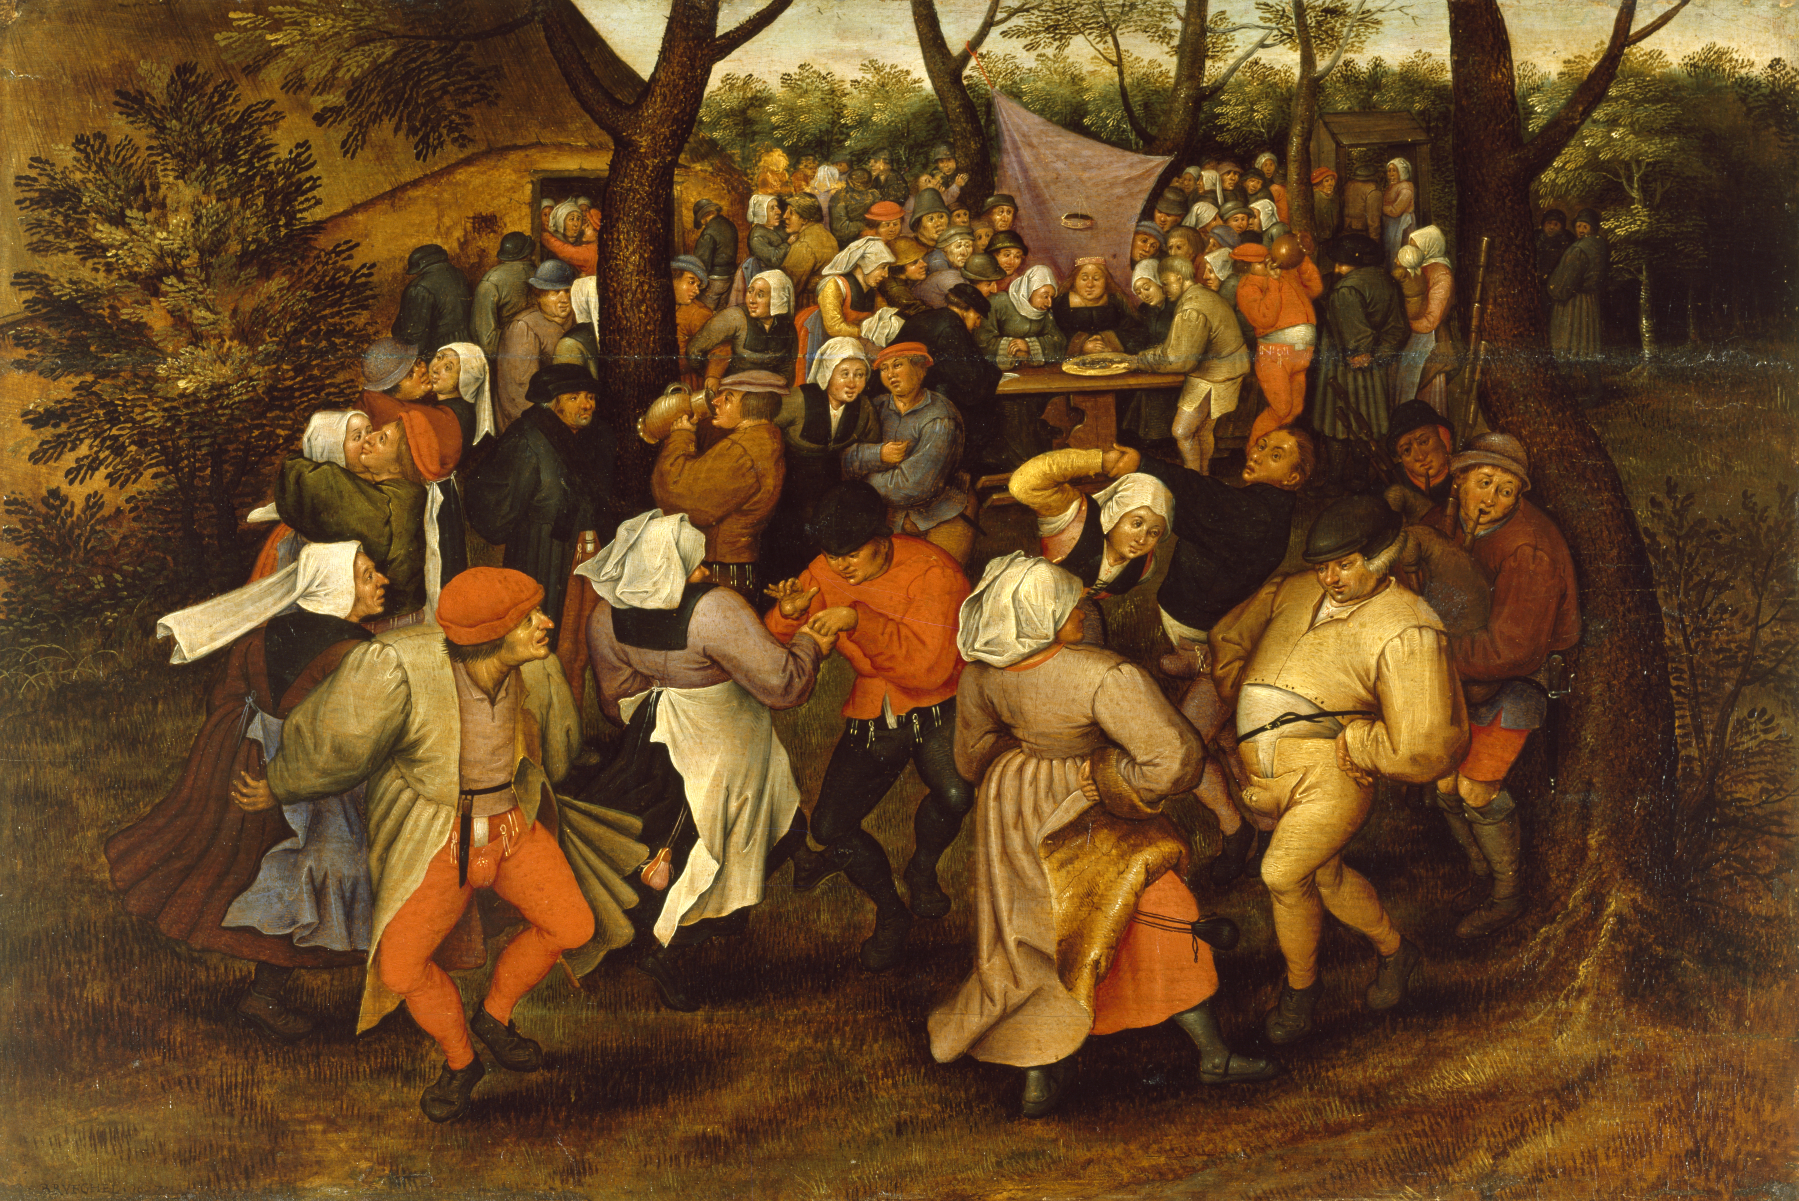 http://upload.wikimedia.org/wikipedia/commons/3/39/Pieter_Bruegel_II_-_Peasant_Wedding_Dance_-_Walters_37364.jpg